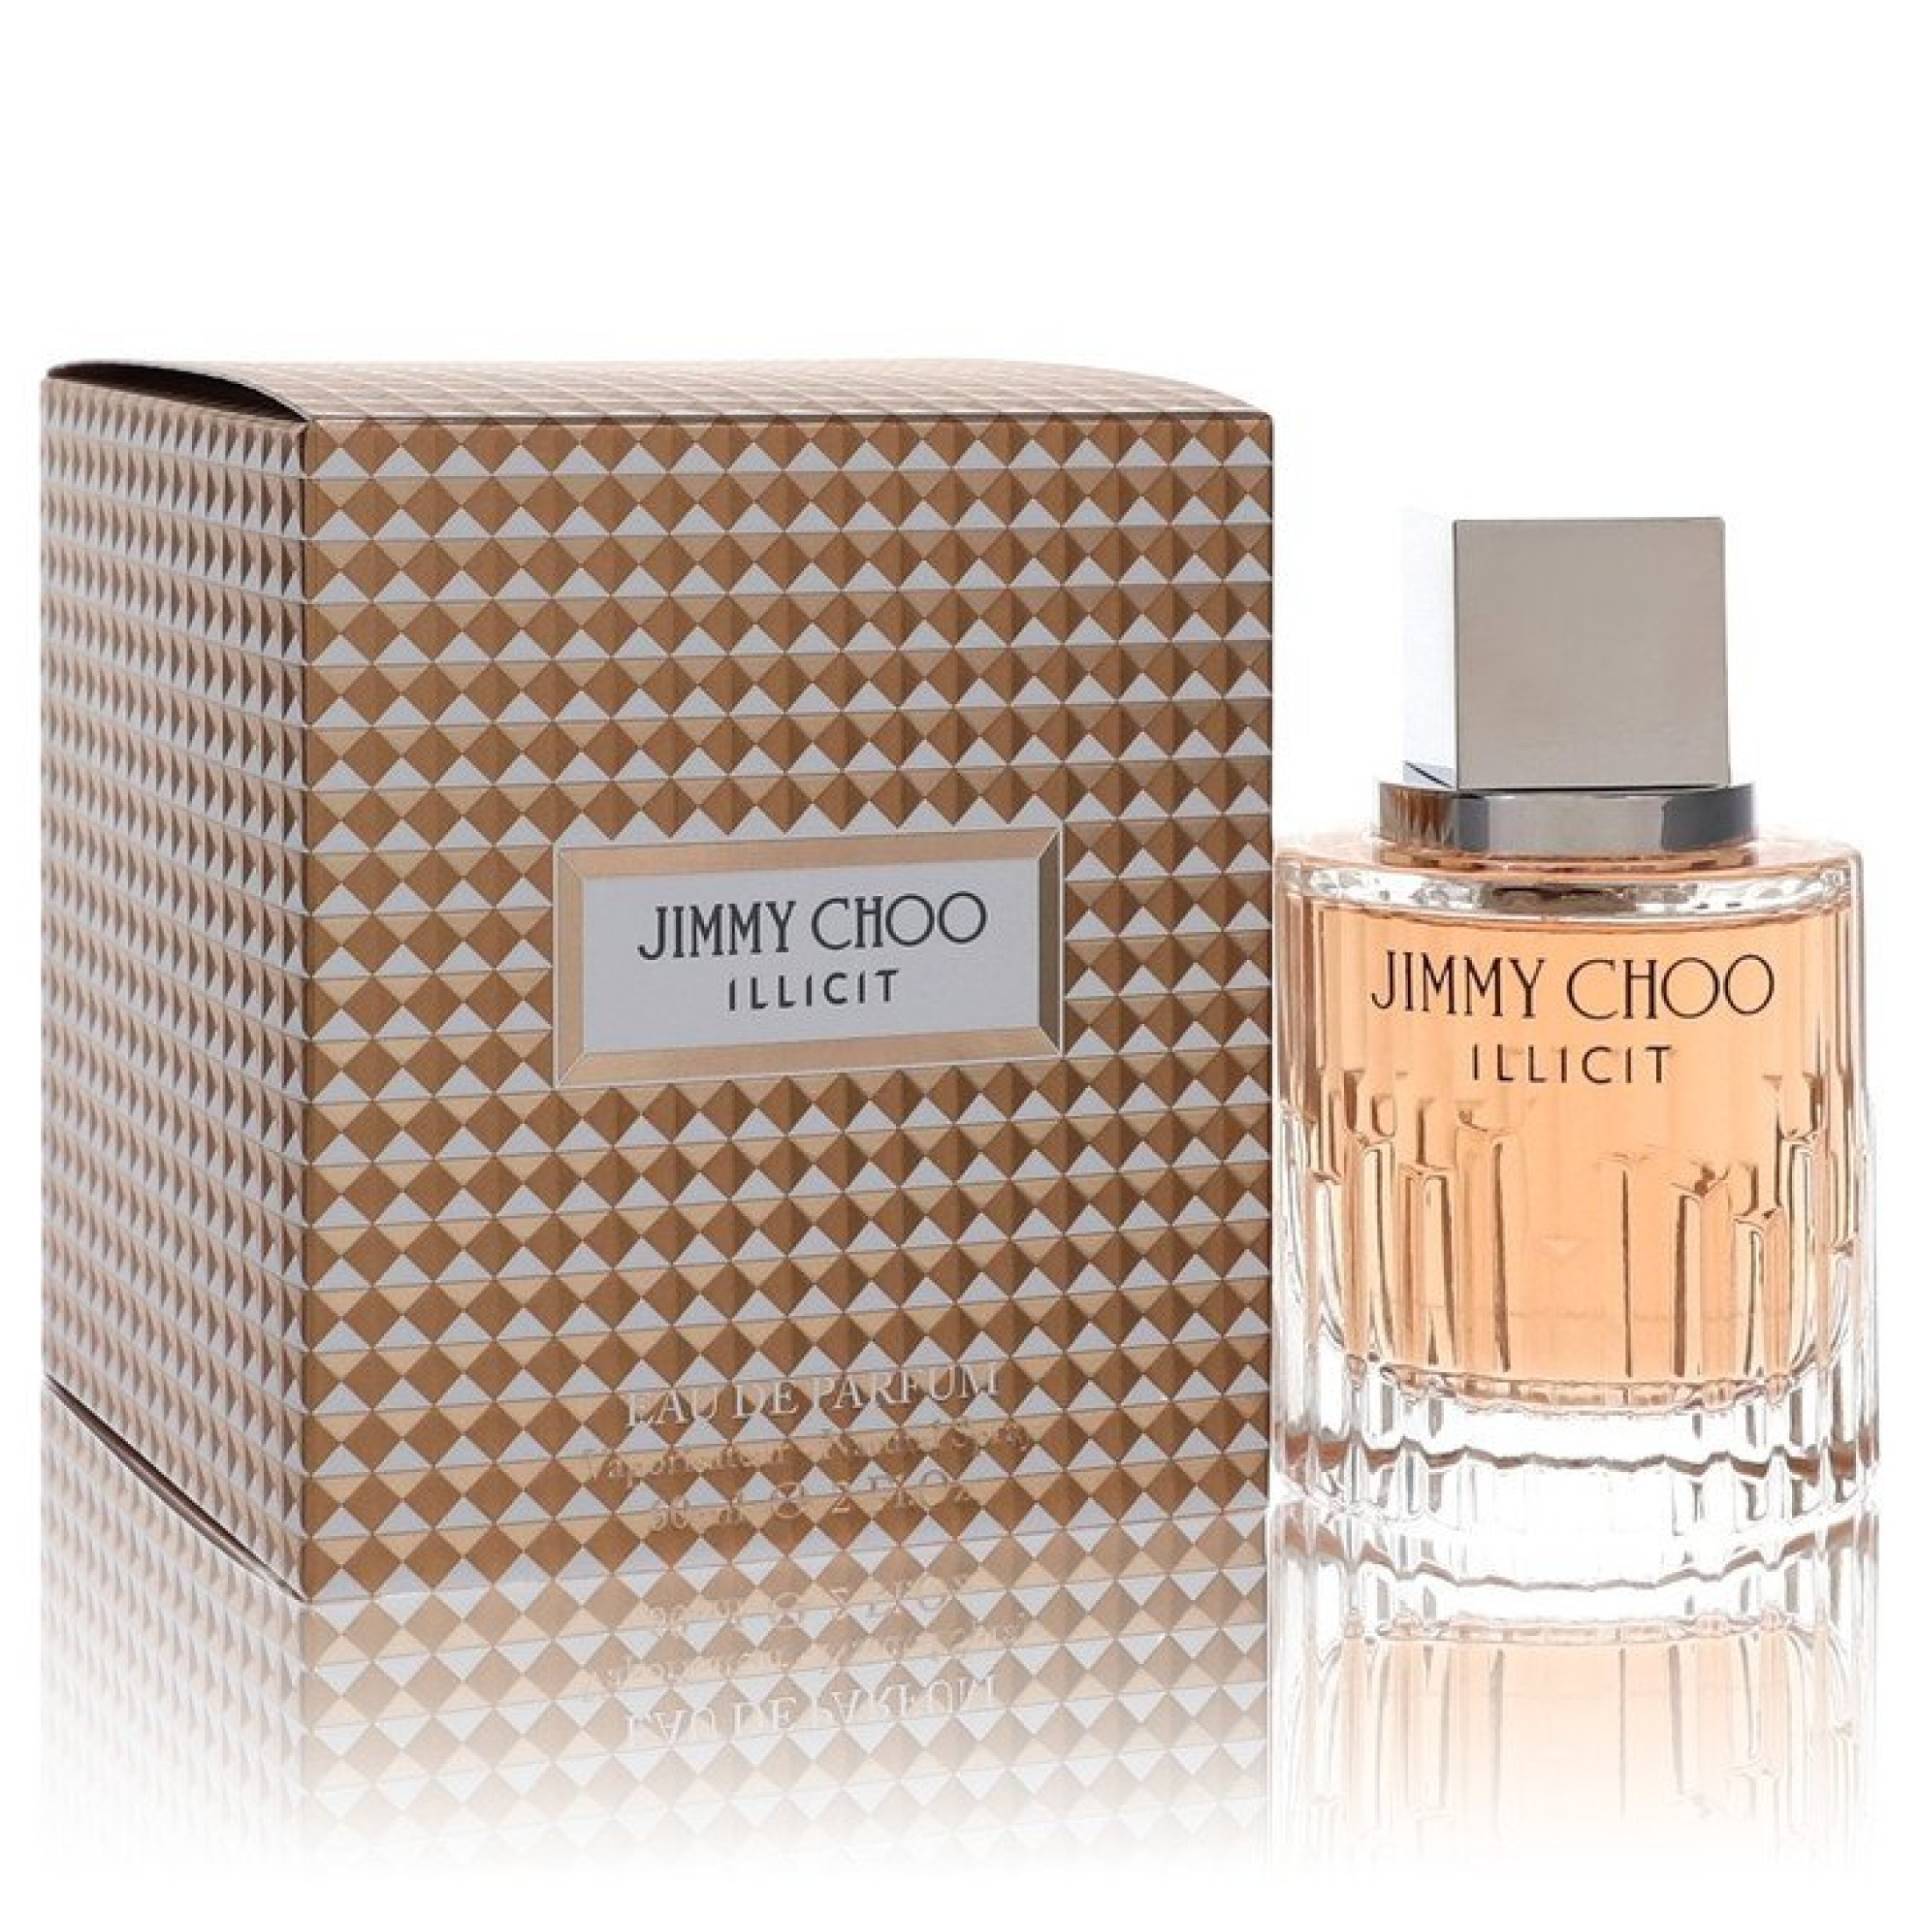 Jimmy Choo Illicit Eau De Parfum Spray 60 ml von Jimmy Choo